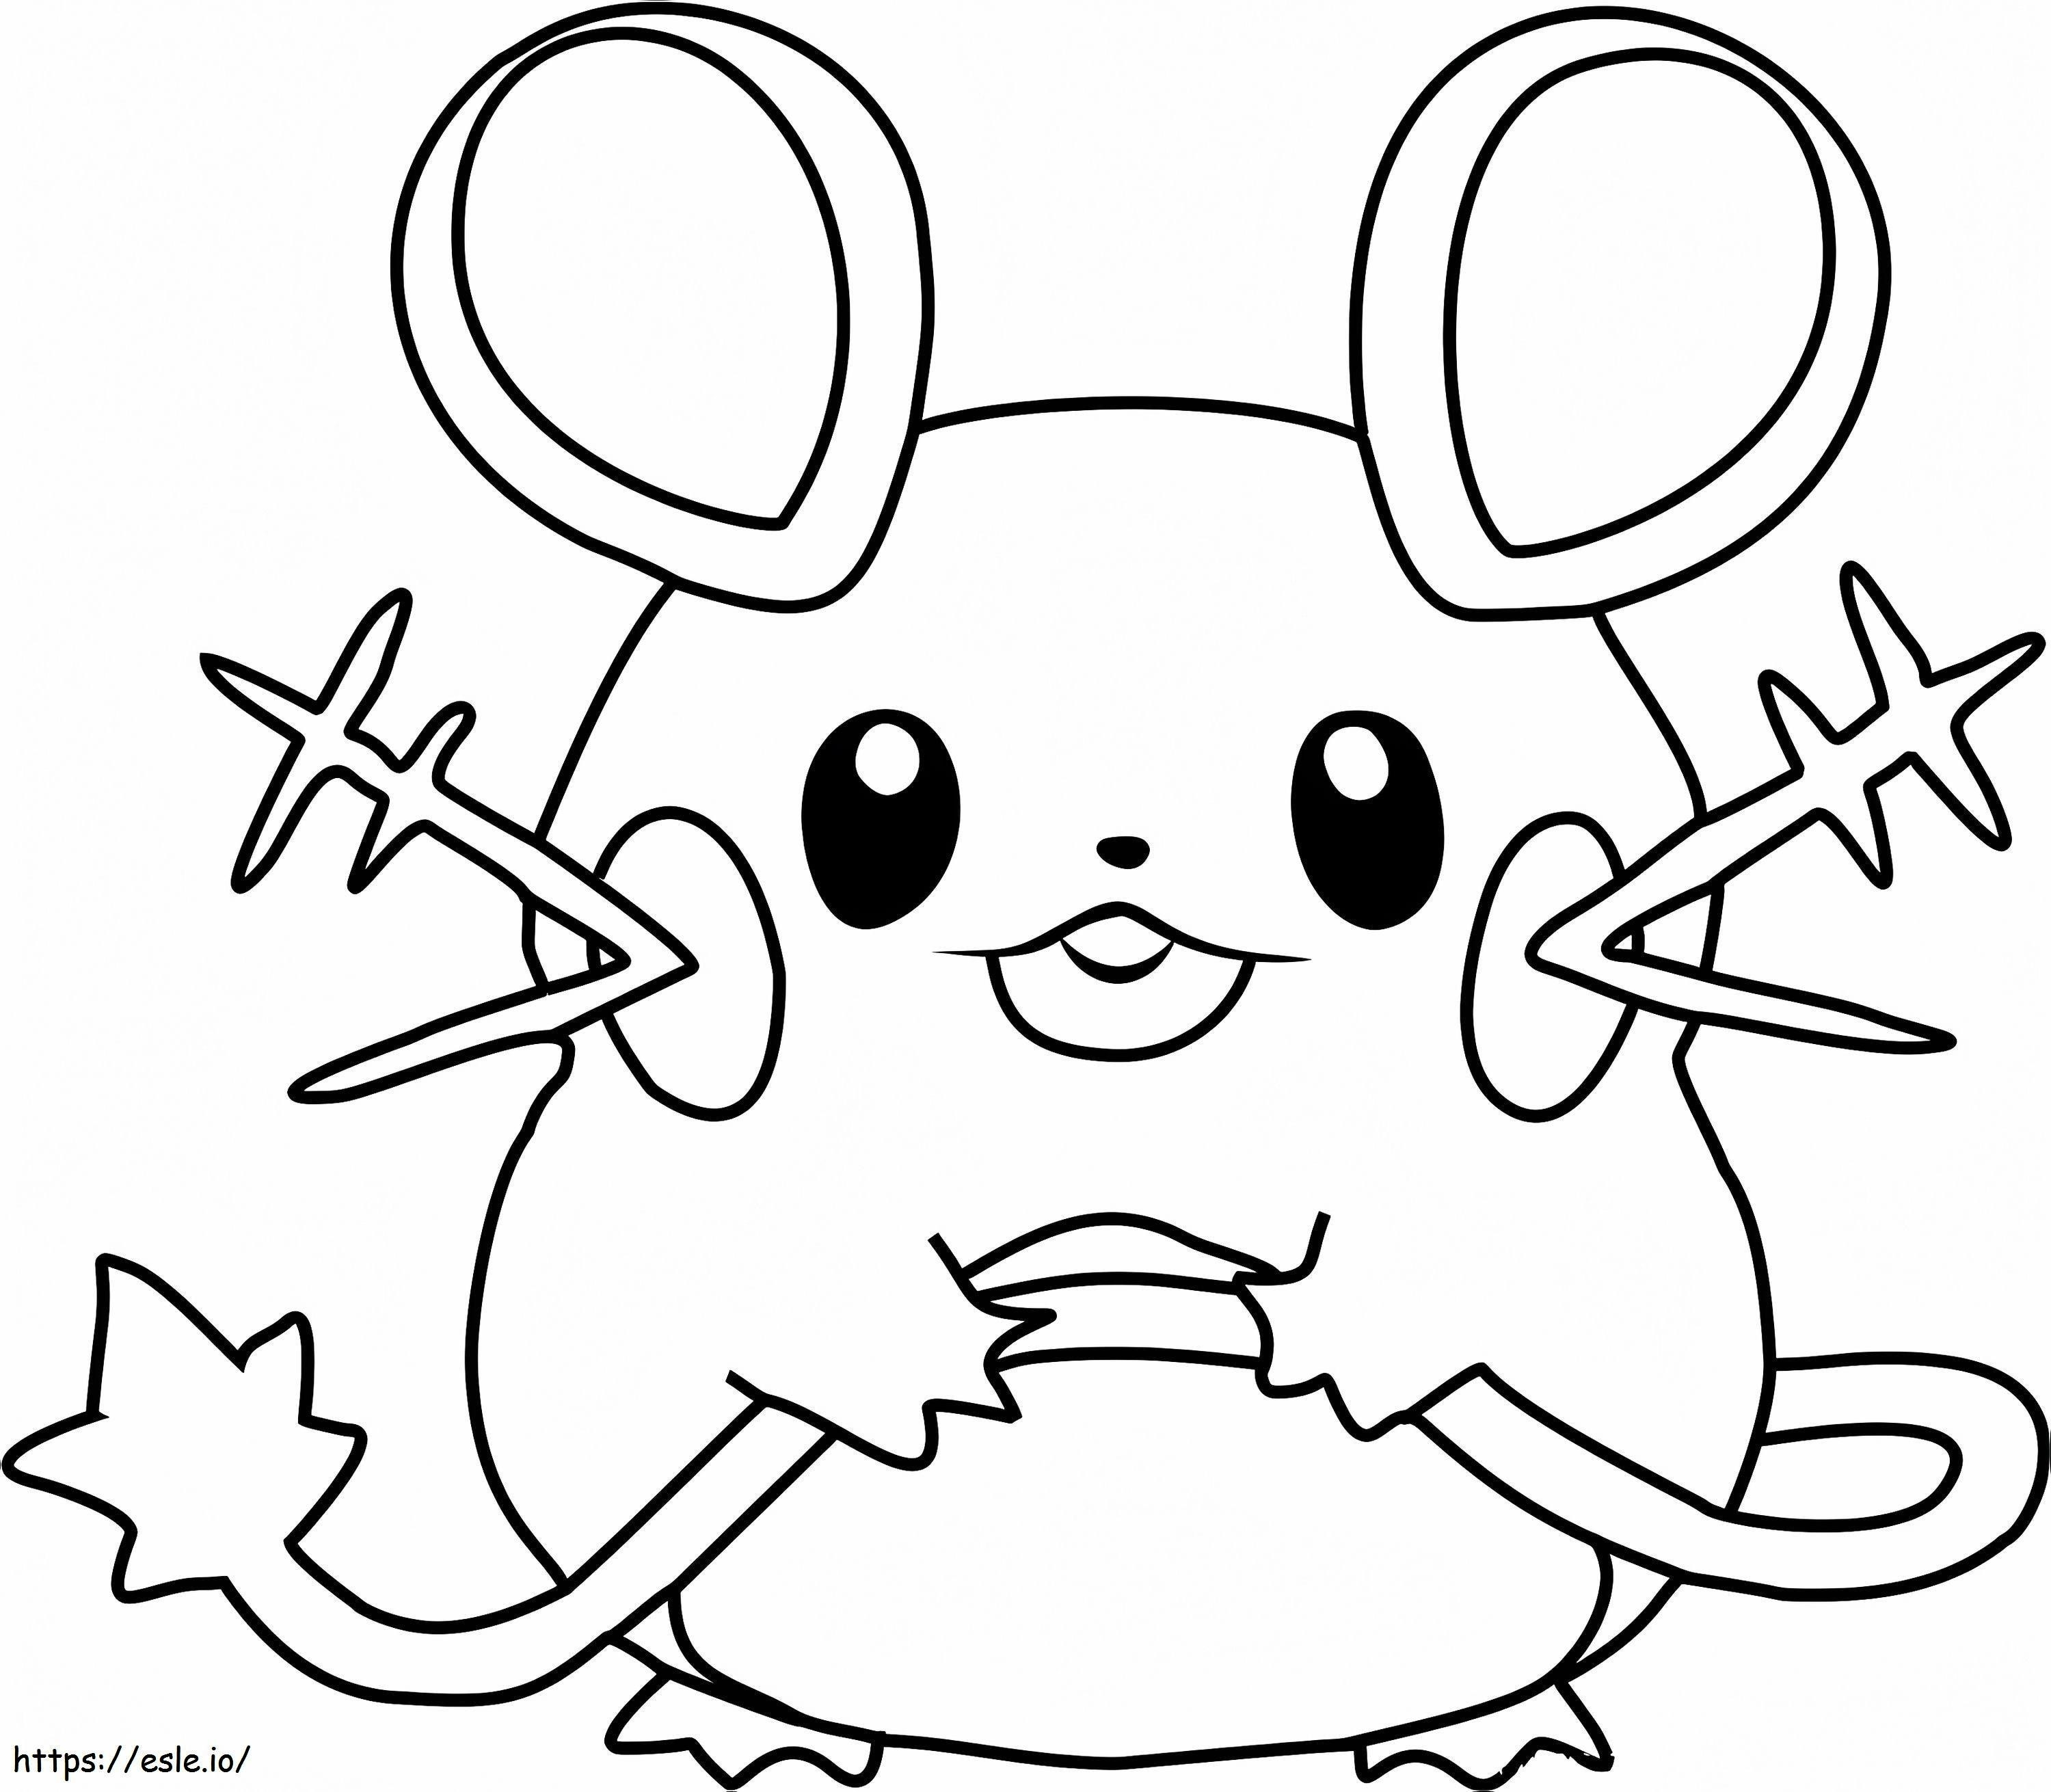 1531186466 Dedenne Pokemon A4 coloring page